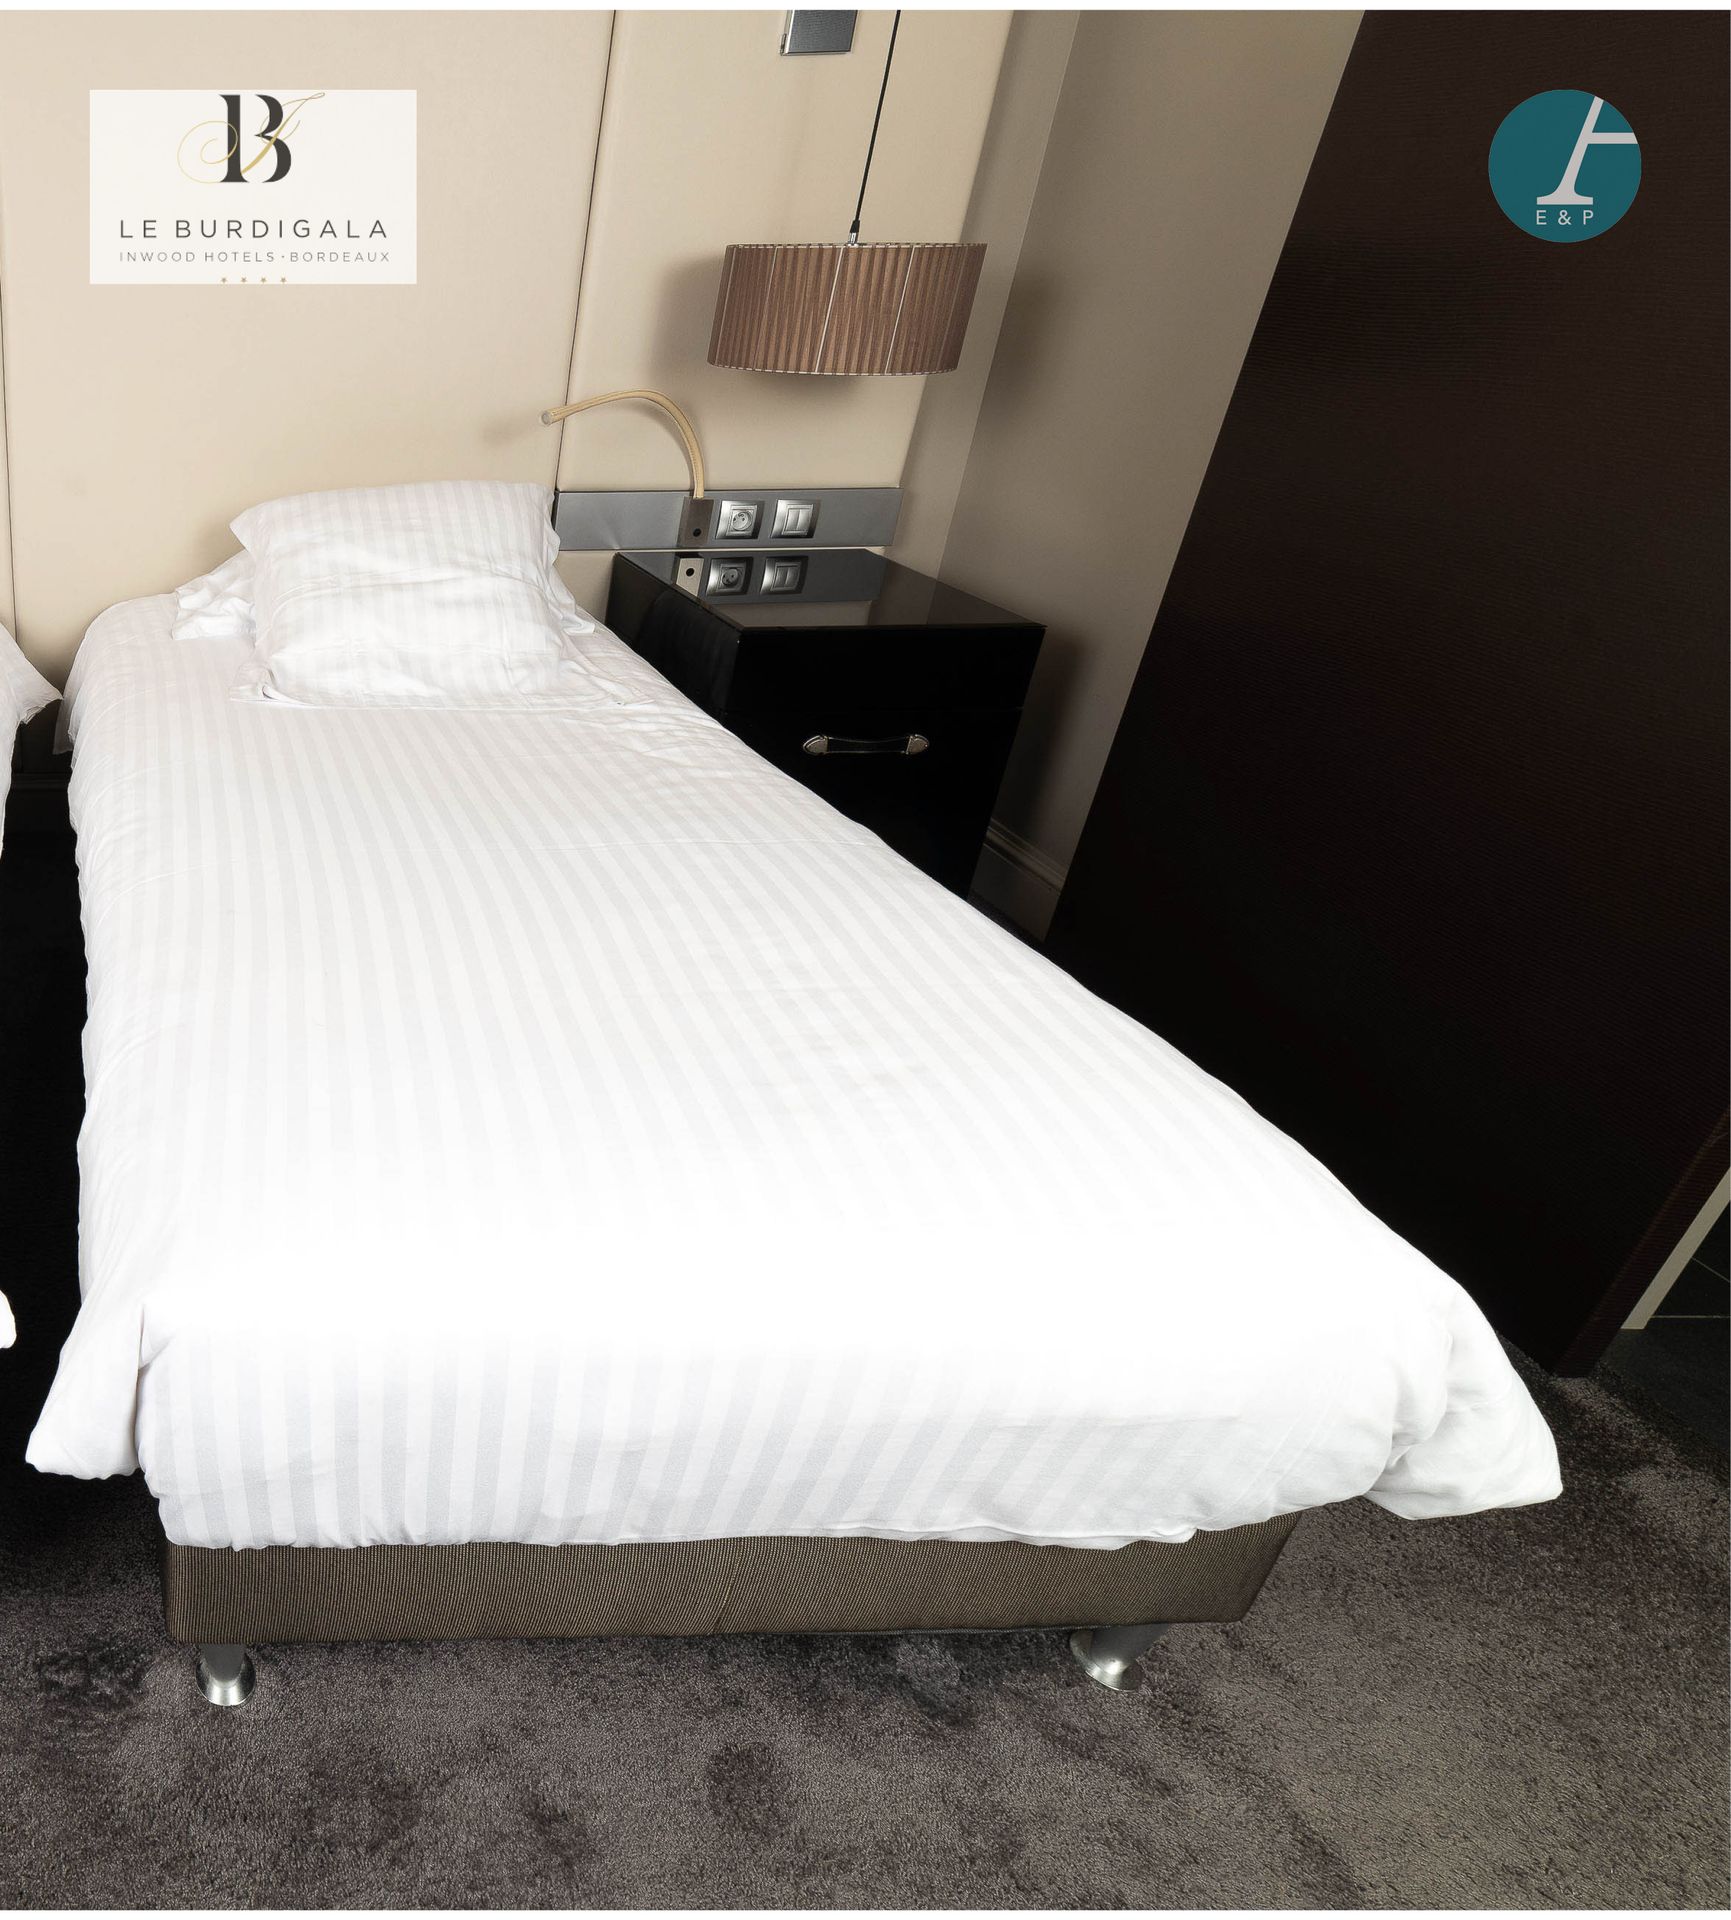 Null Aus dem Burdigala, 4* Hotel in Bordeaux.



Ein einfaches Bett. Lattenrost &hellip;